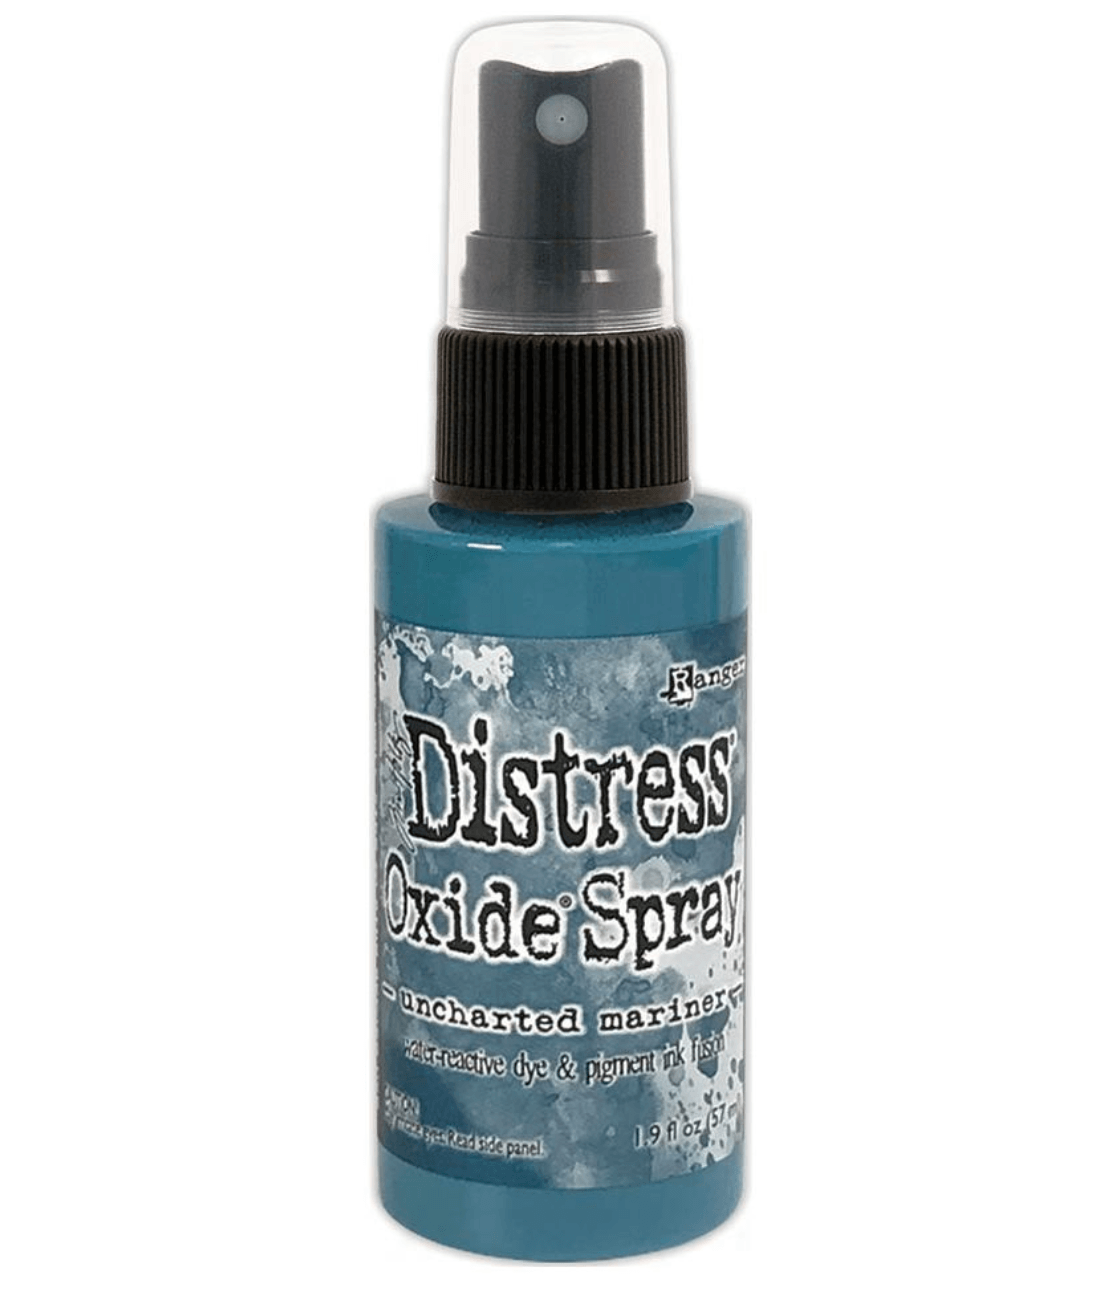 Tim Holtz Distress Oxide Spray - Uncharted Mariner - Ranger Ink - Messy Papercrafts